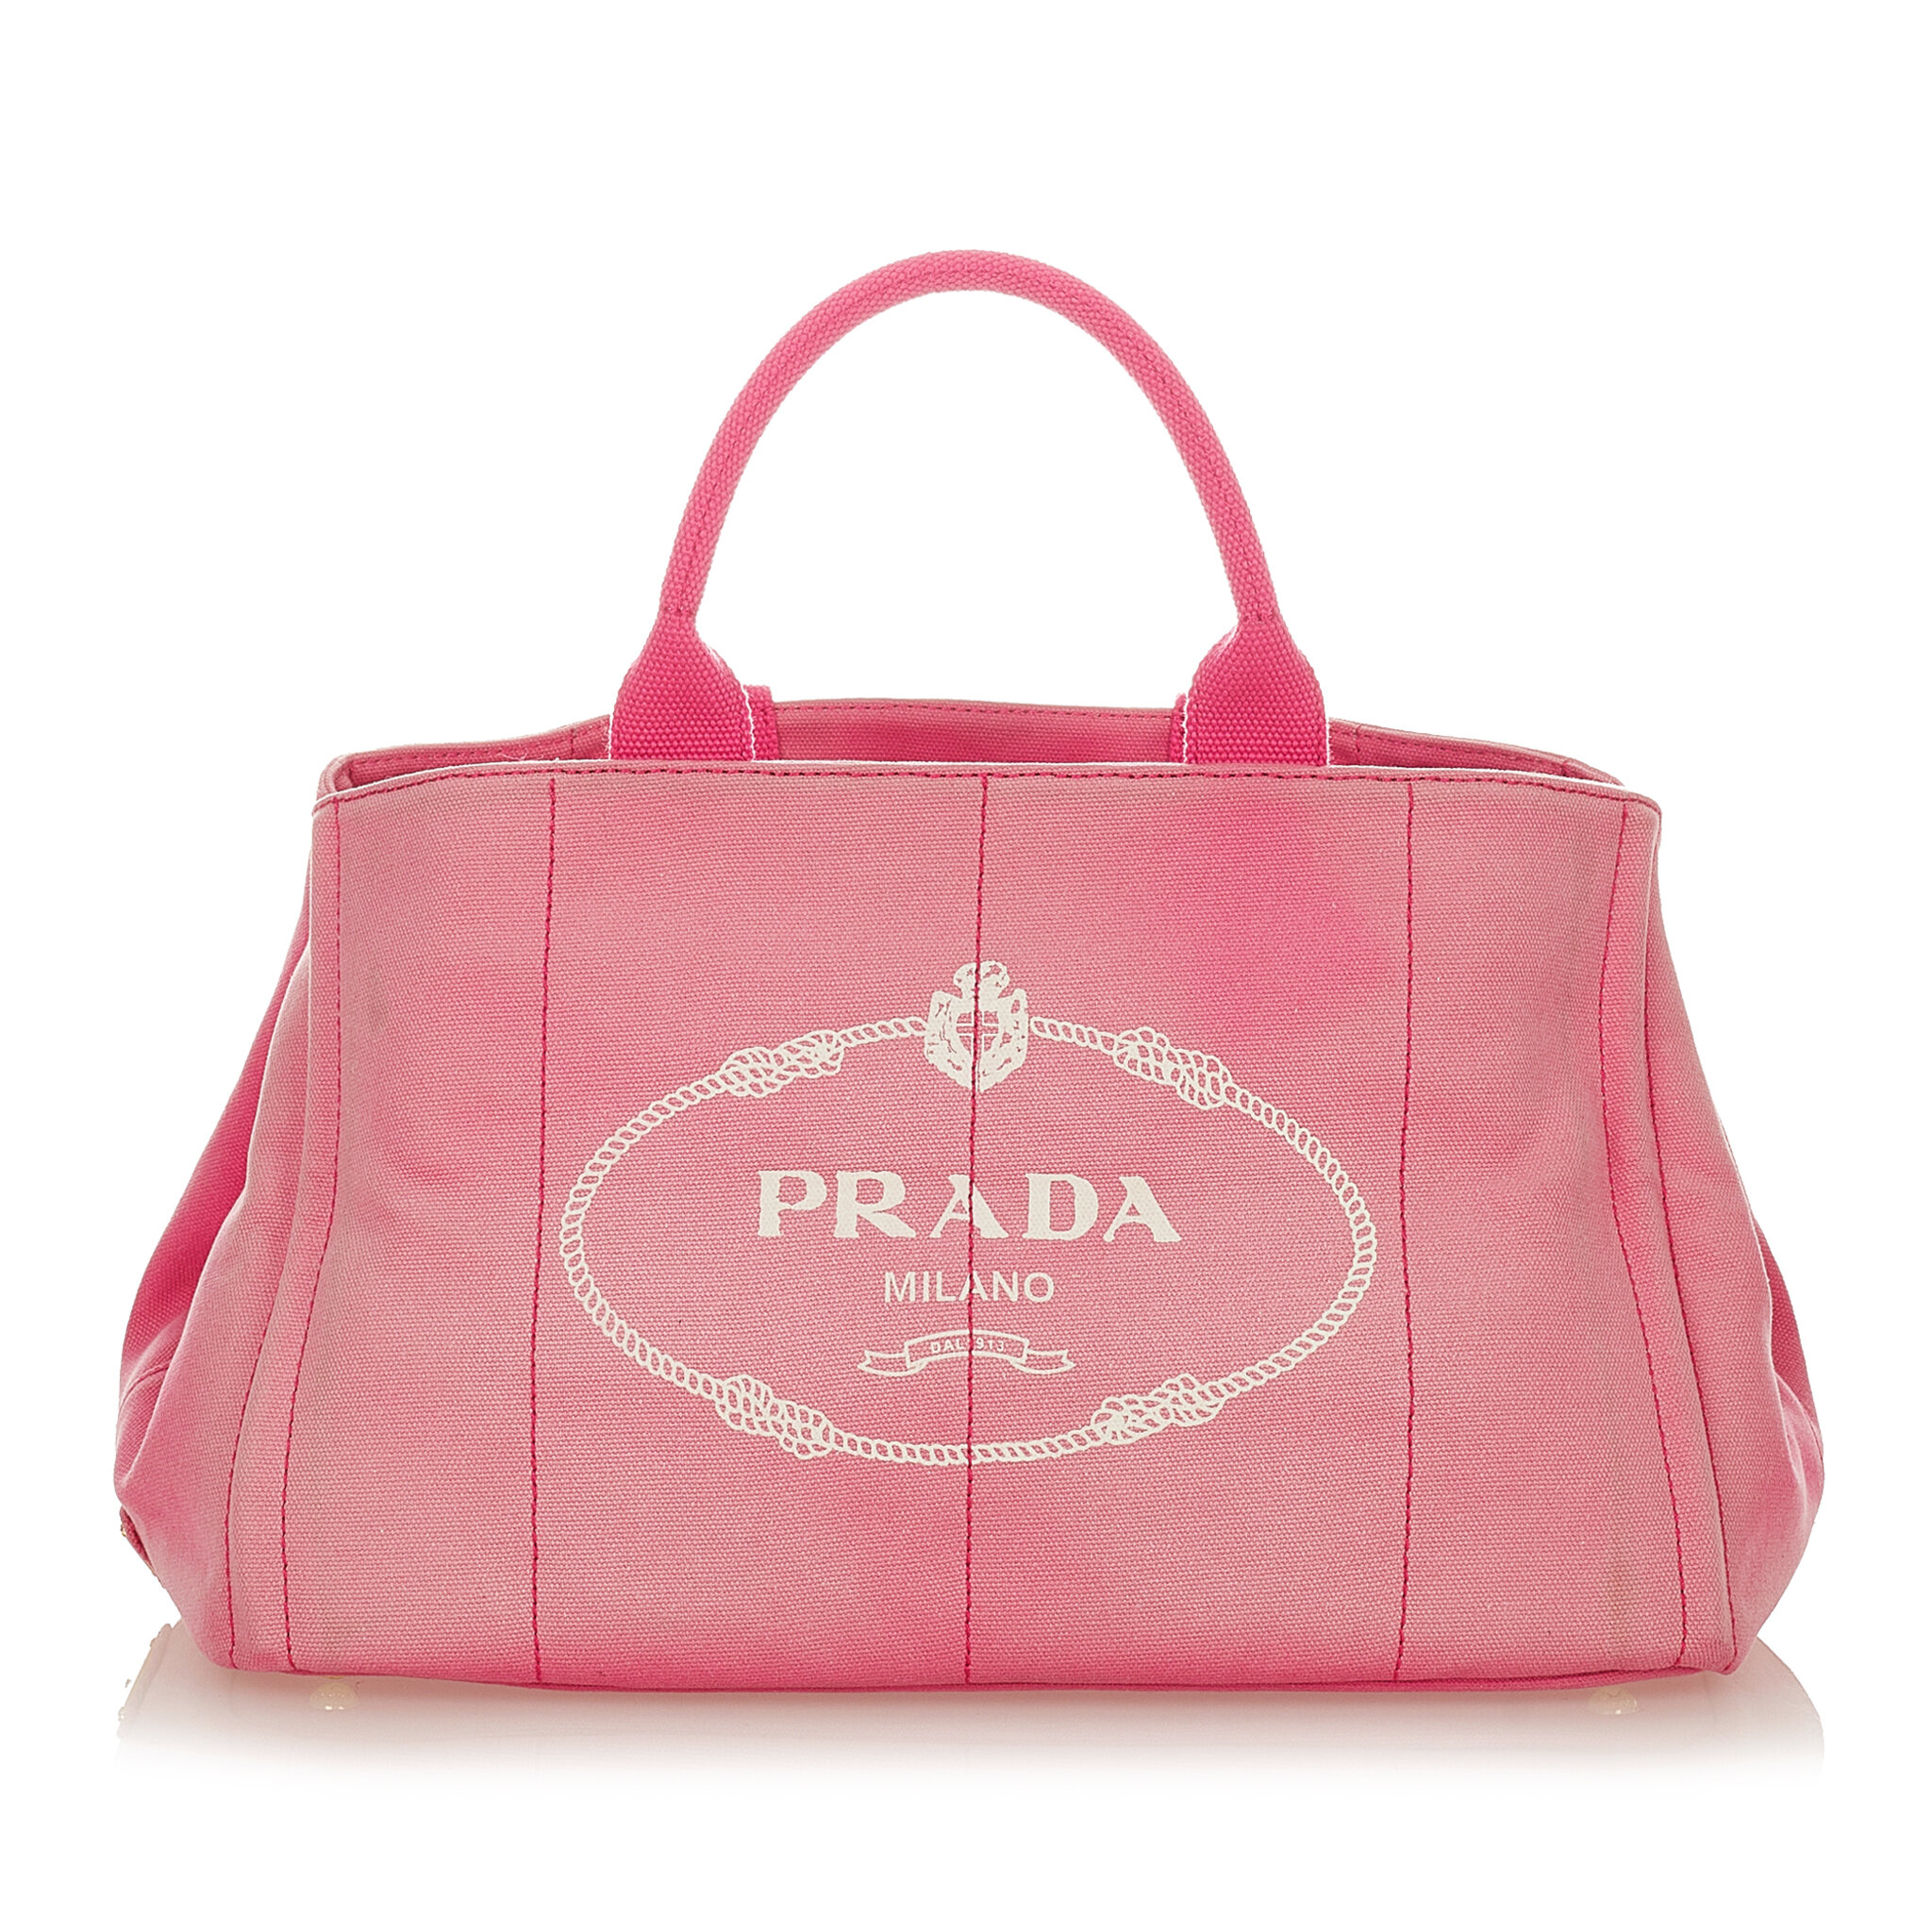 Prada Canapa Logo Canvas Handbag, ONESIZE, pink